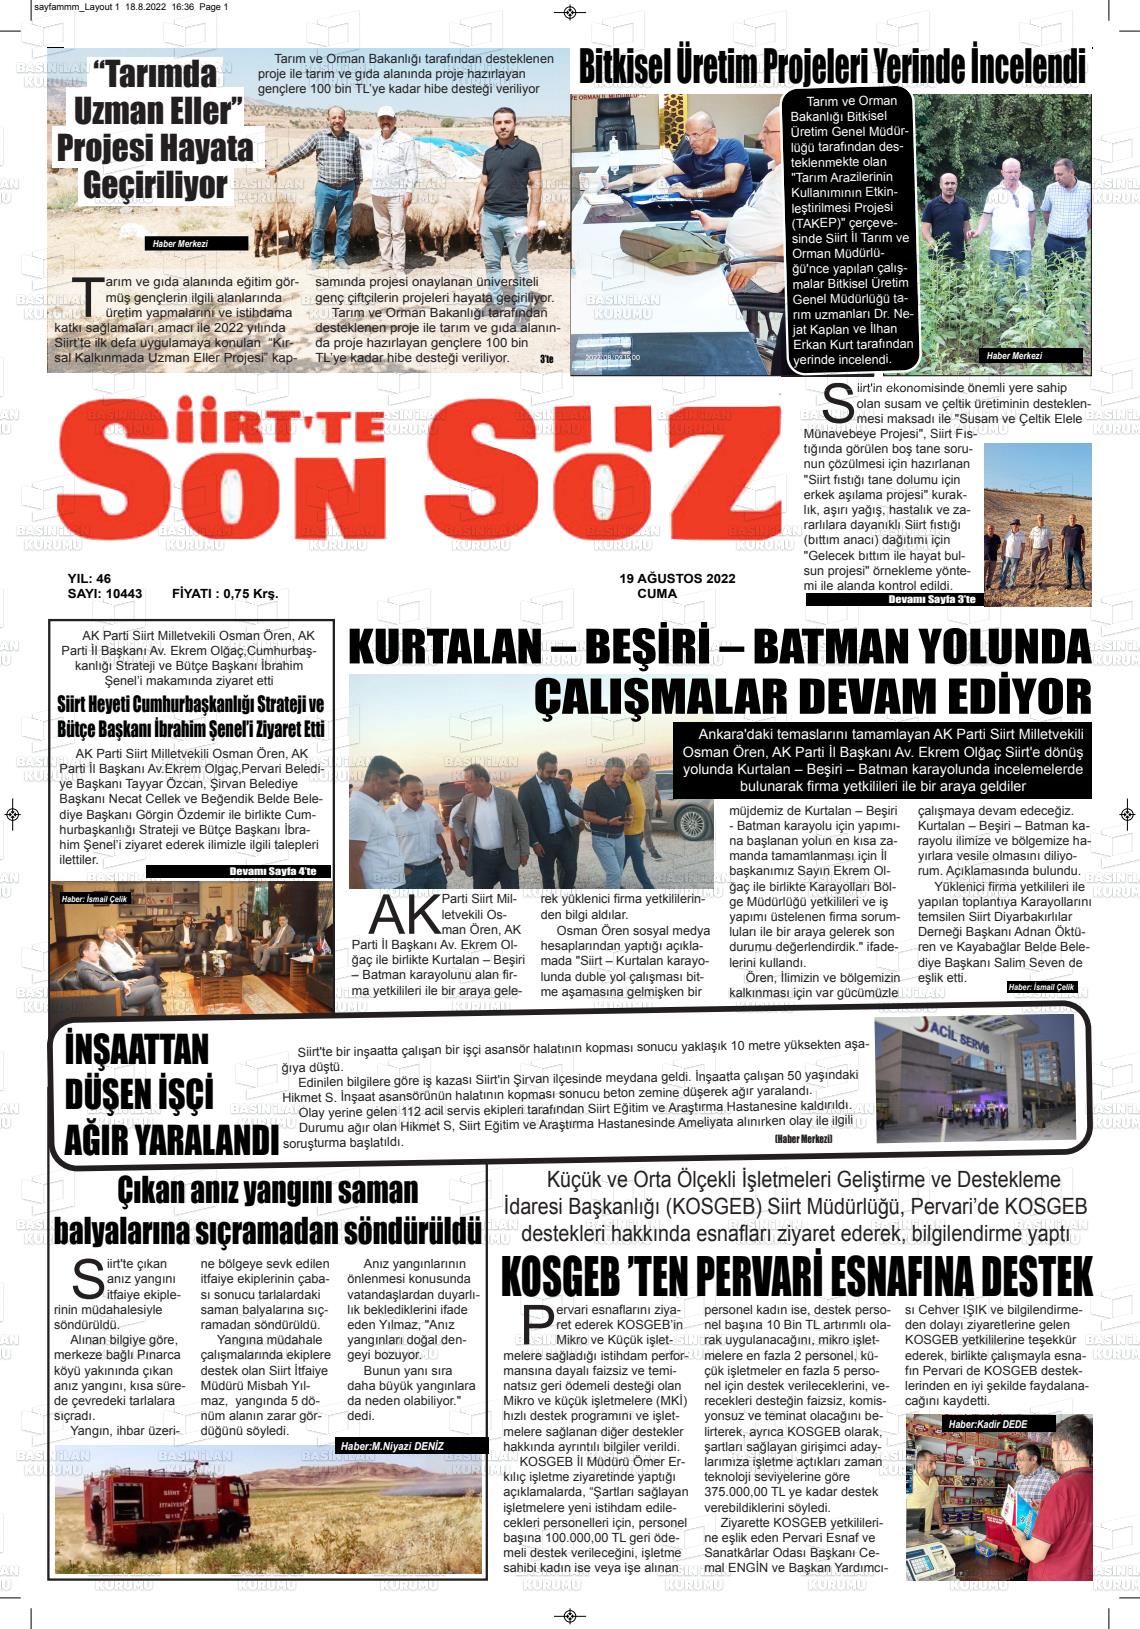 Siirt'te Sonsöz Gazete Manşeti